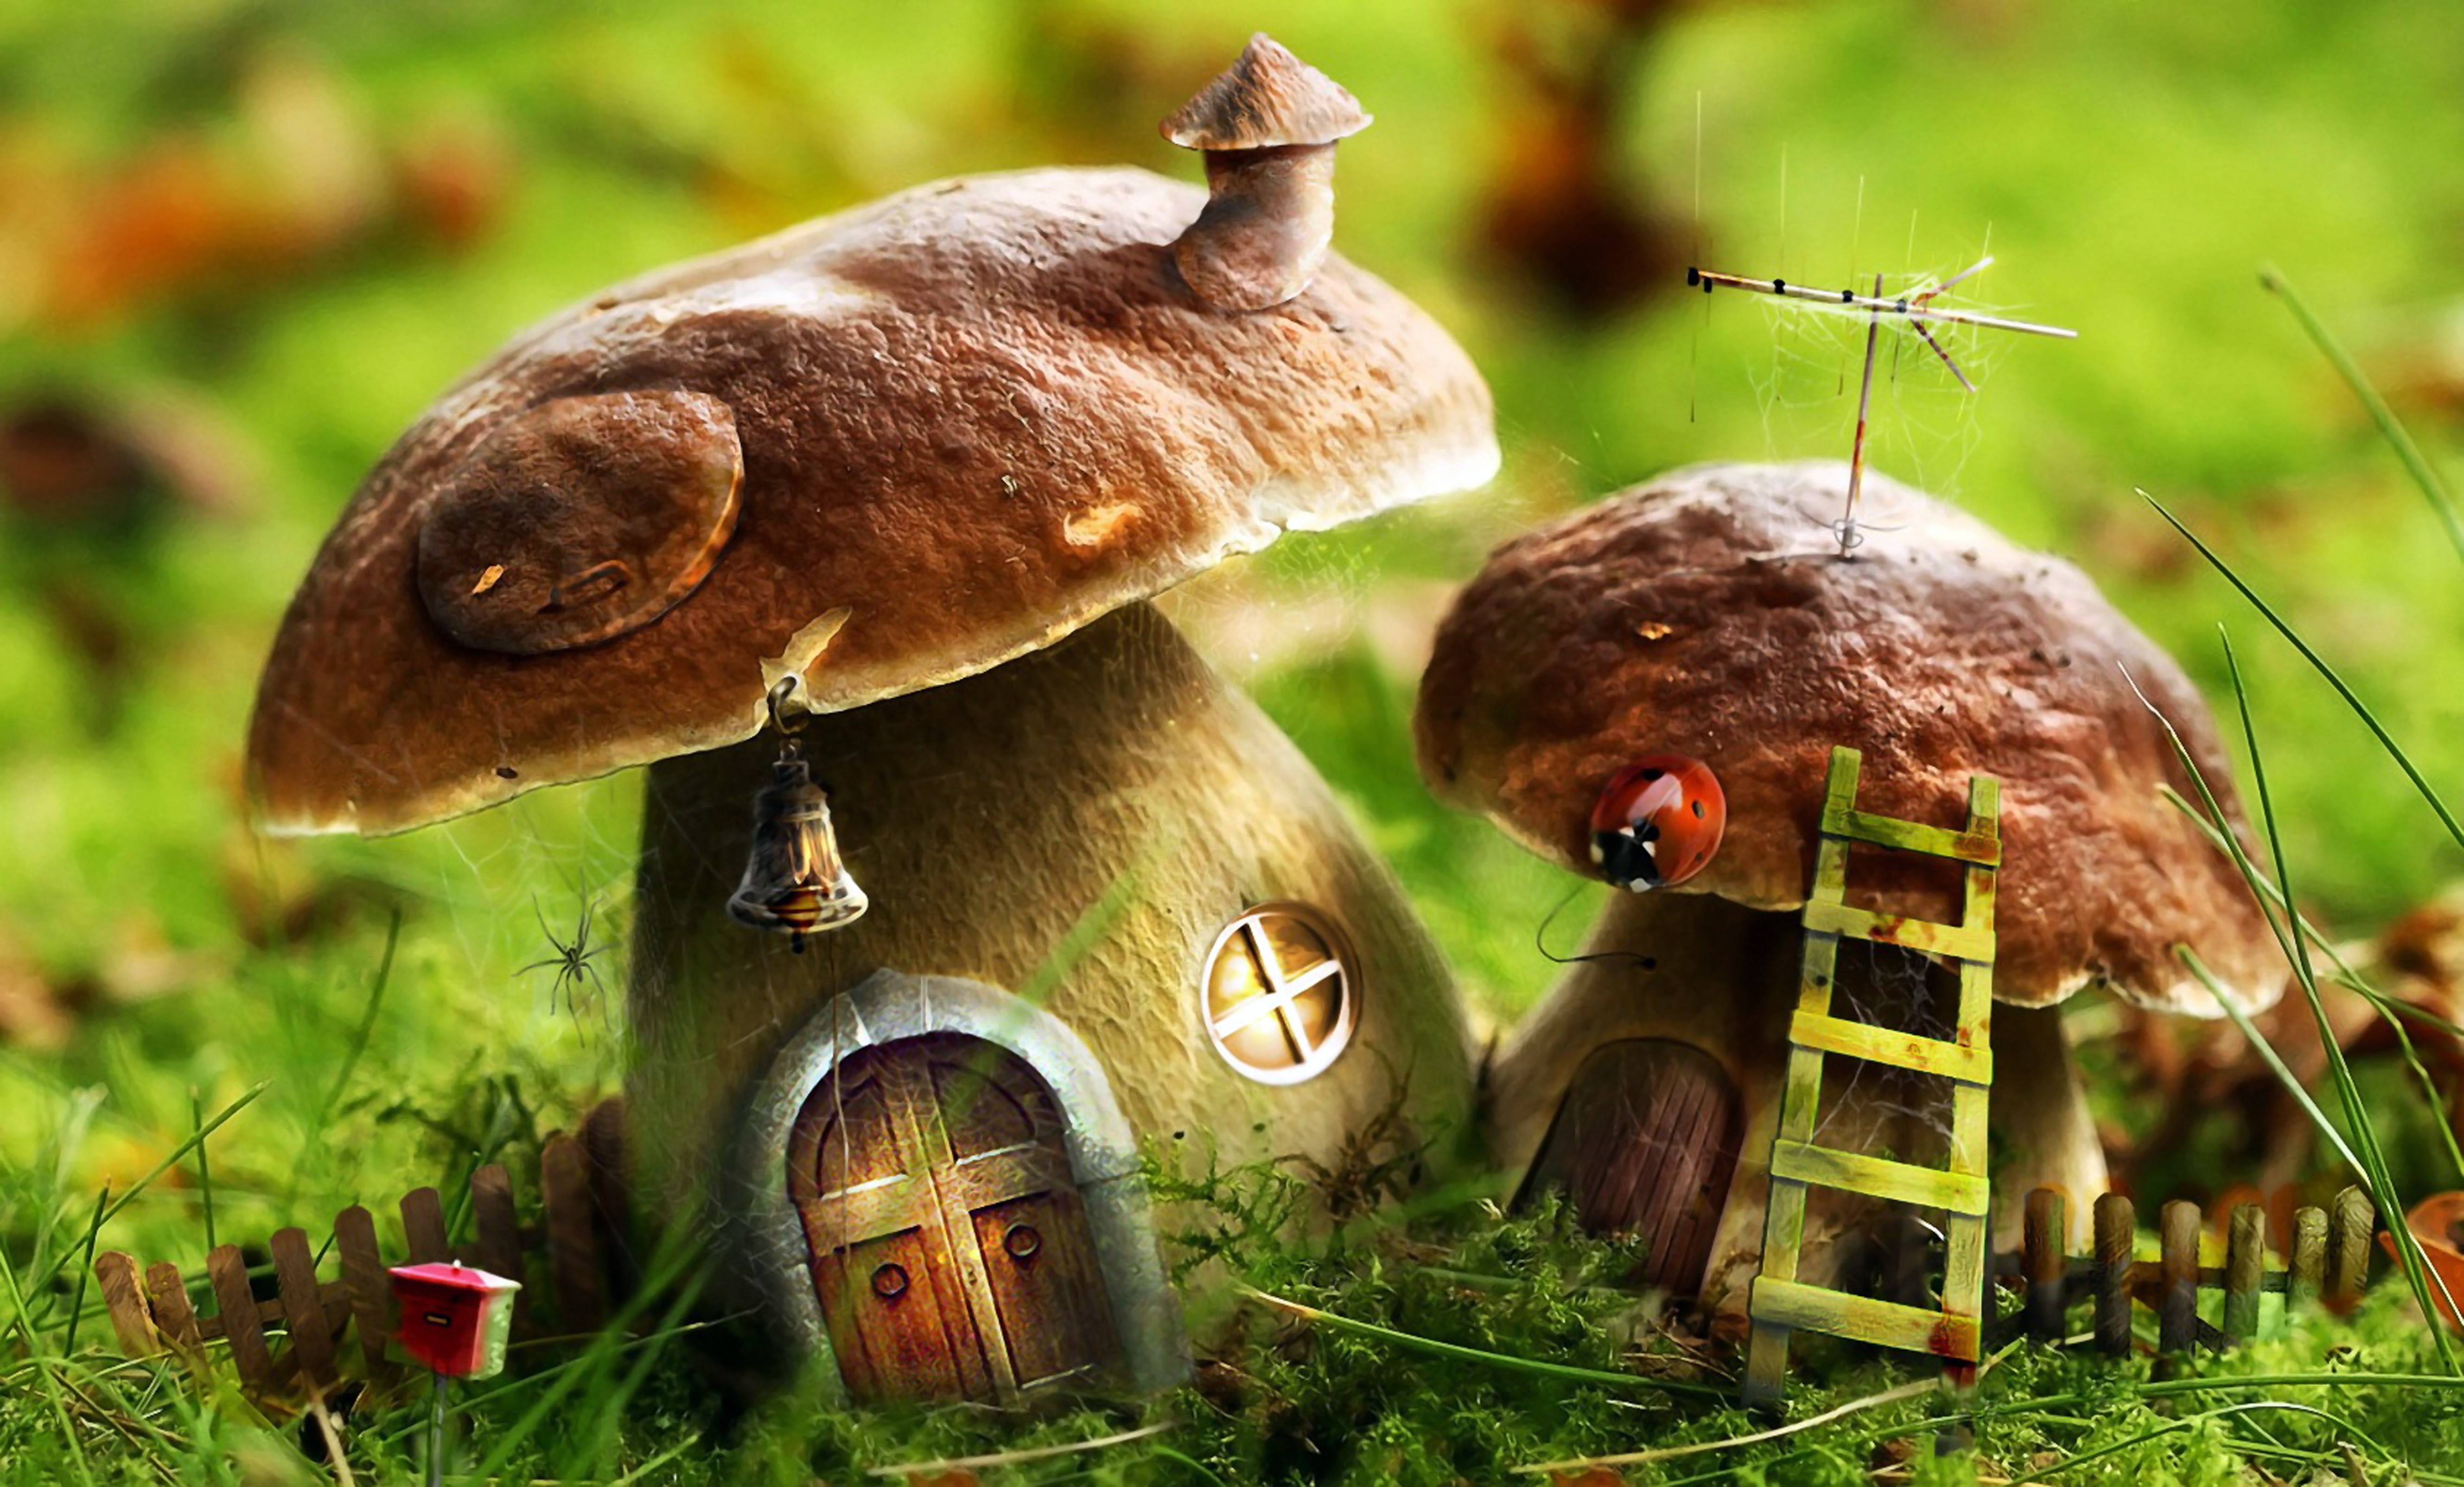 Wallpapers fairy-tale houses fabulous mushrooms white fungus on the desktop